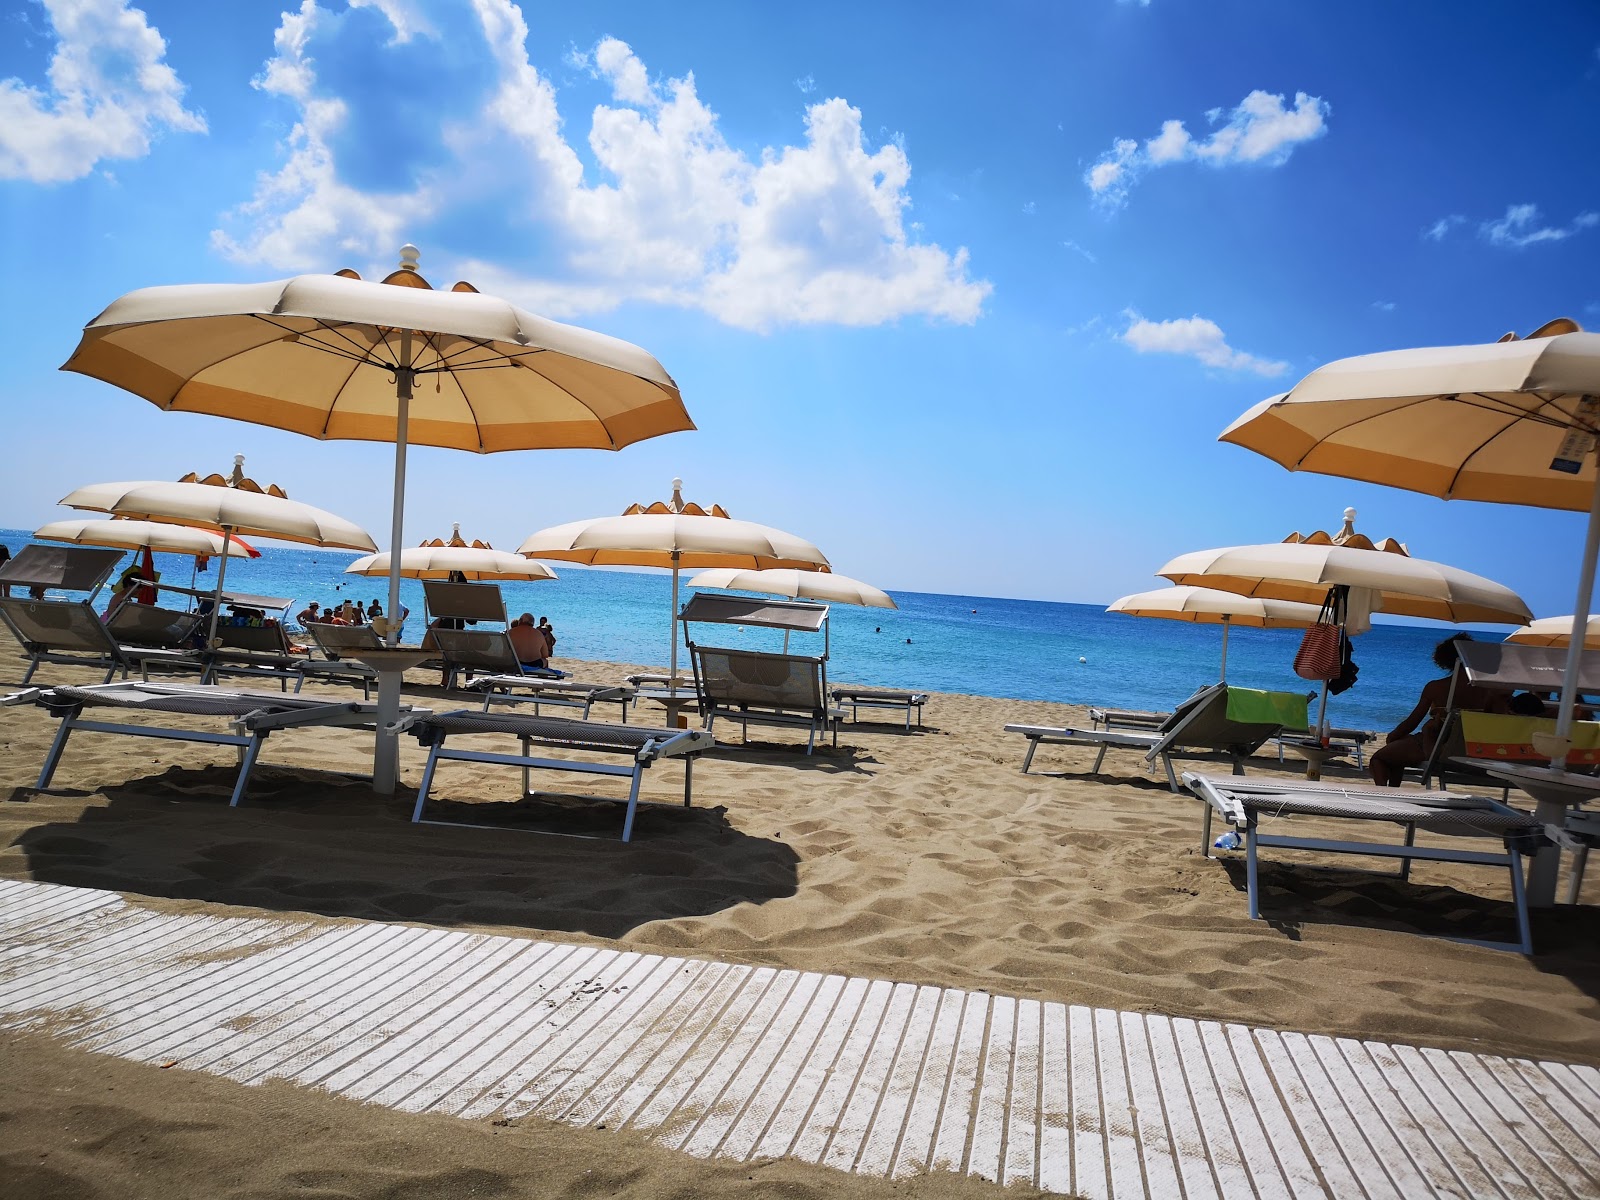 Spiaggia di Torre Mozza'in fotoğrafı plaj tatil beldesi alanı